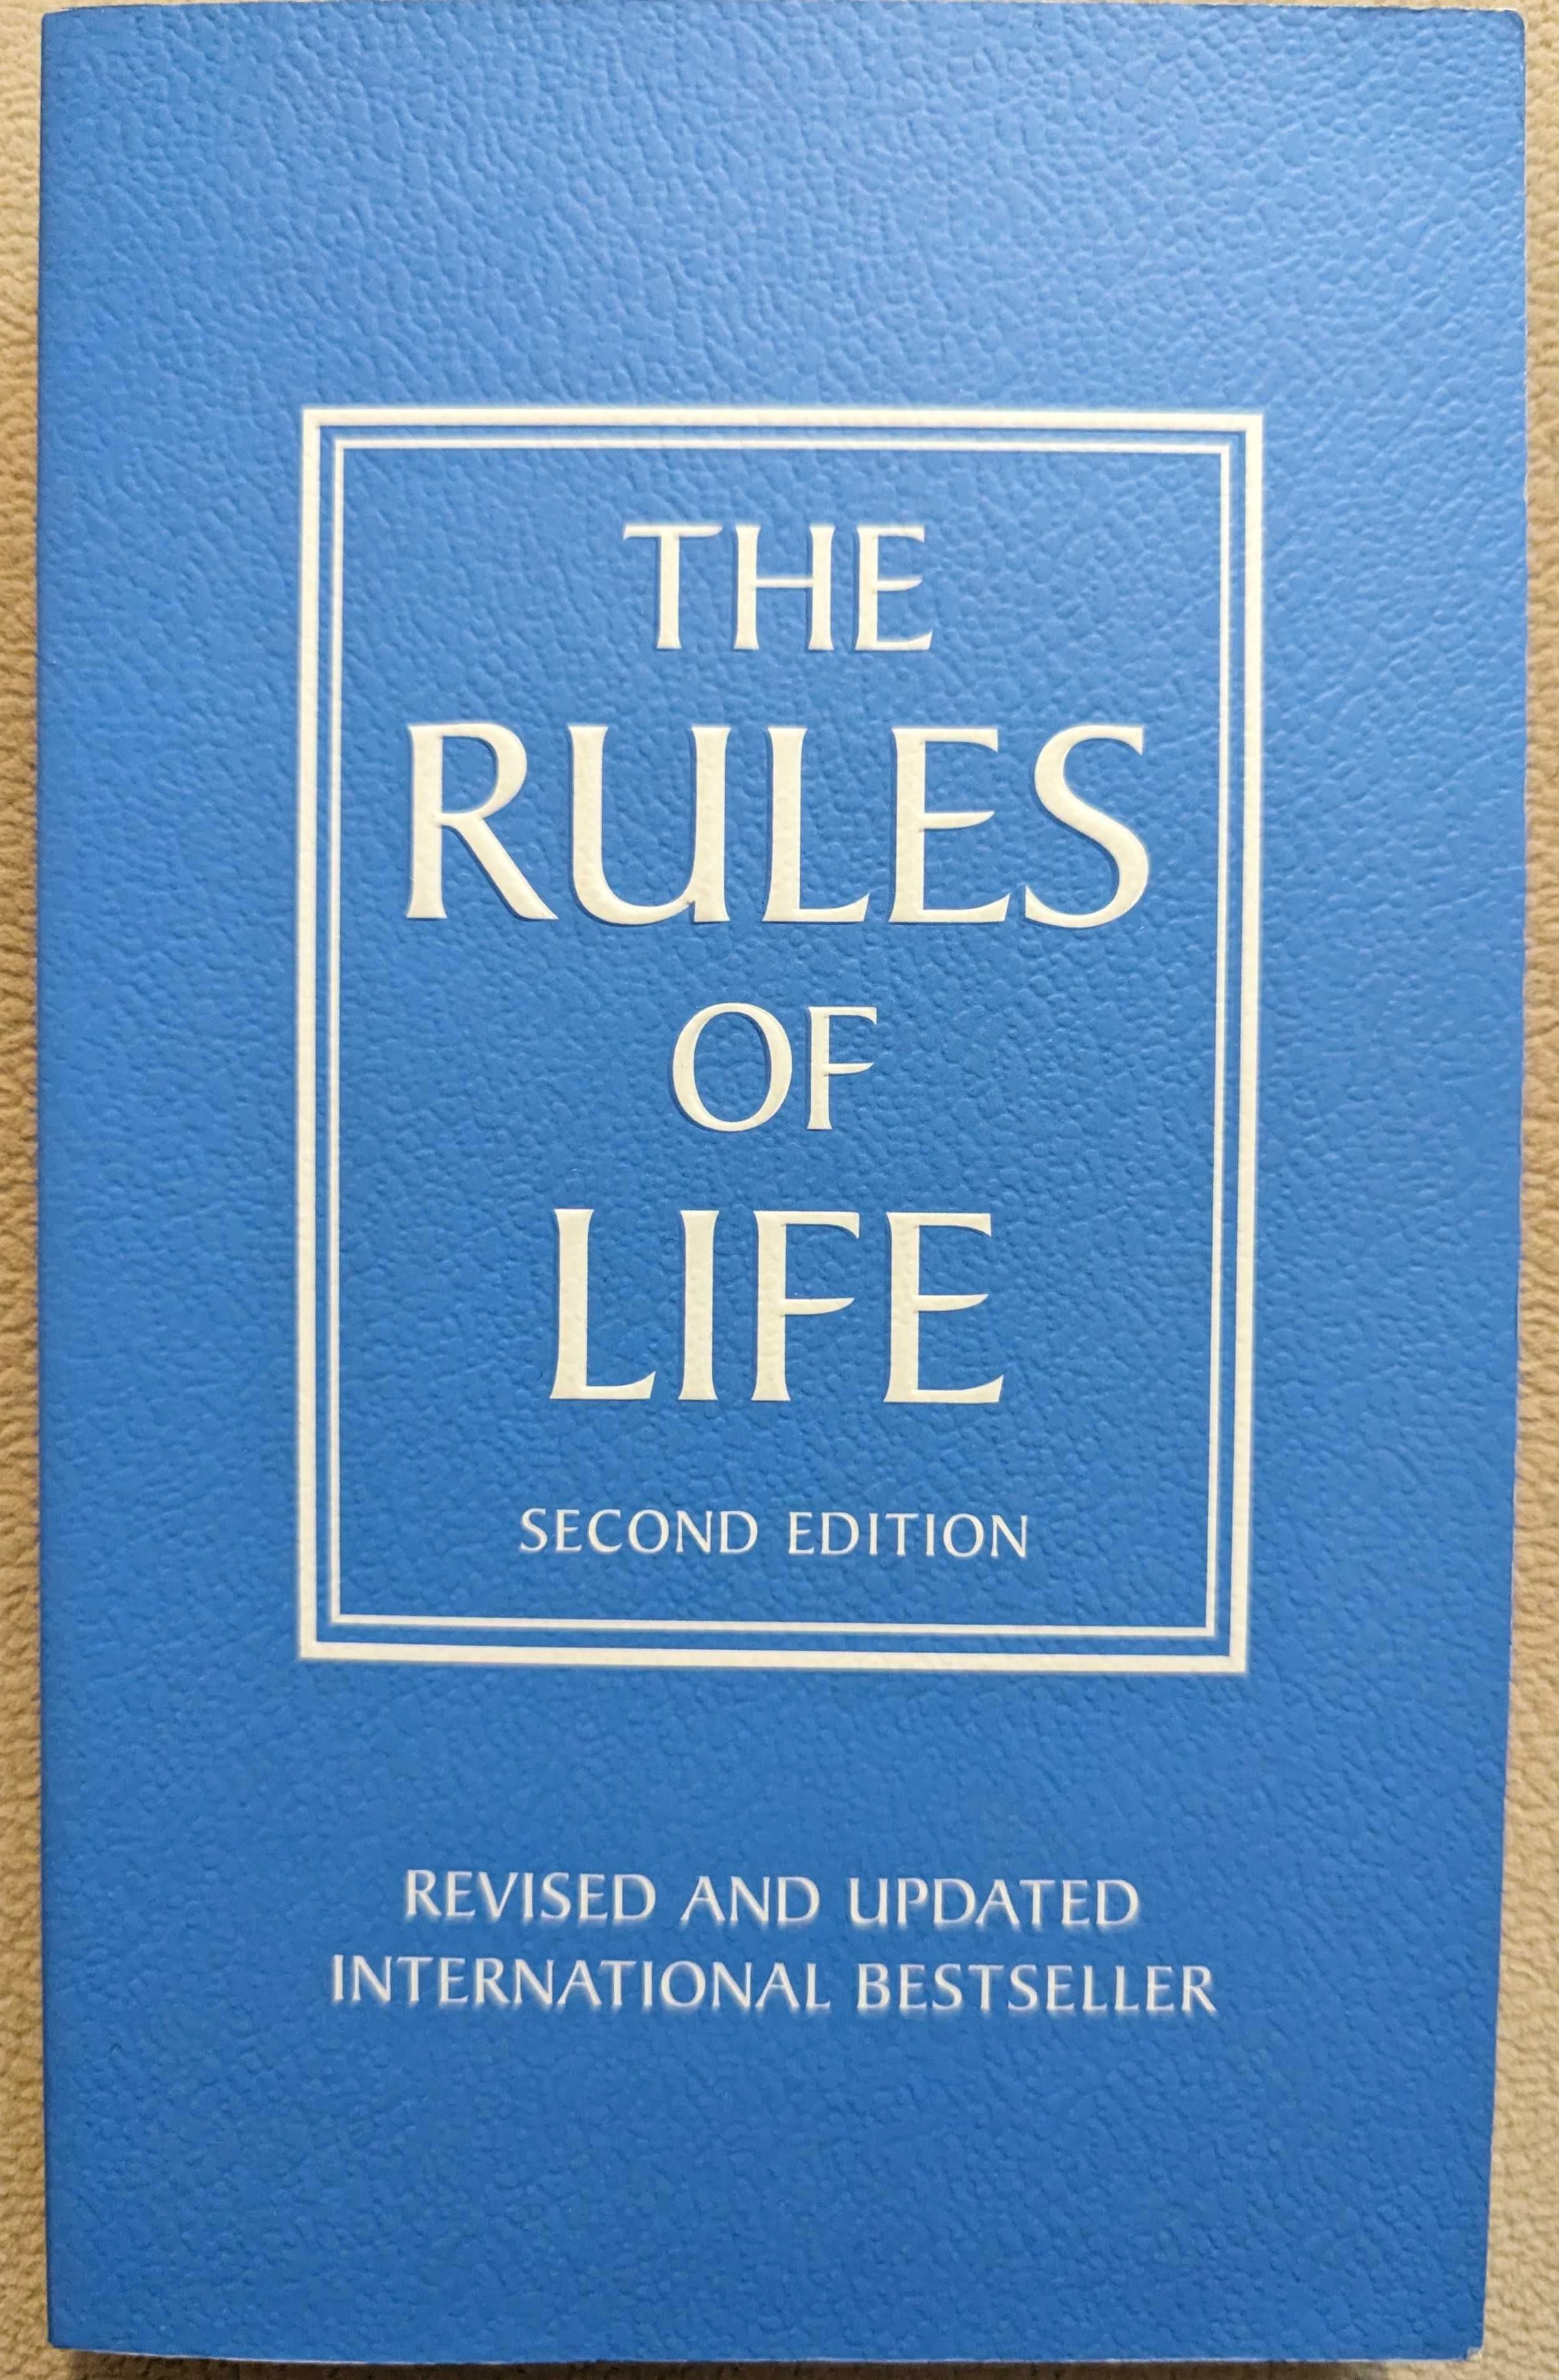 The rules of life - Richard Templar